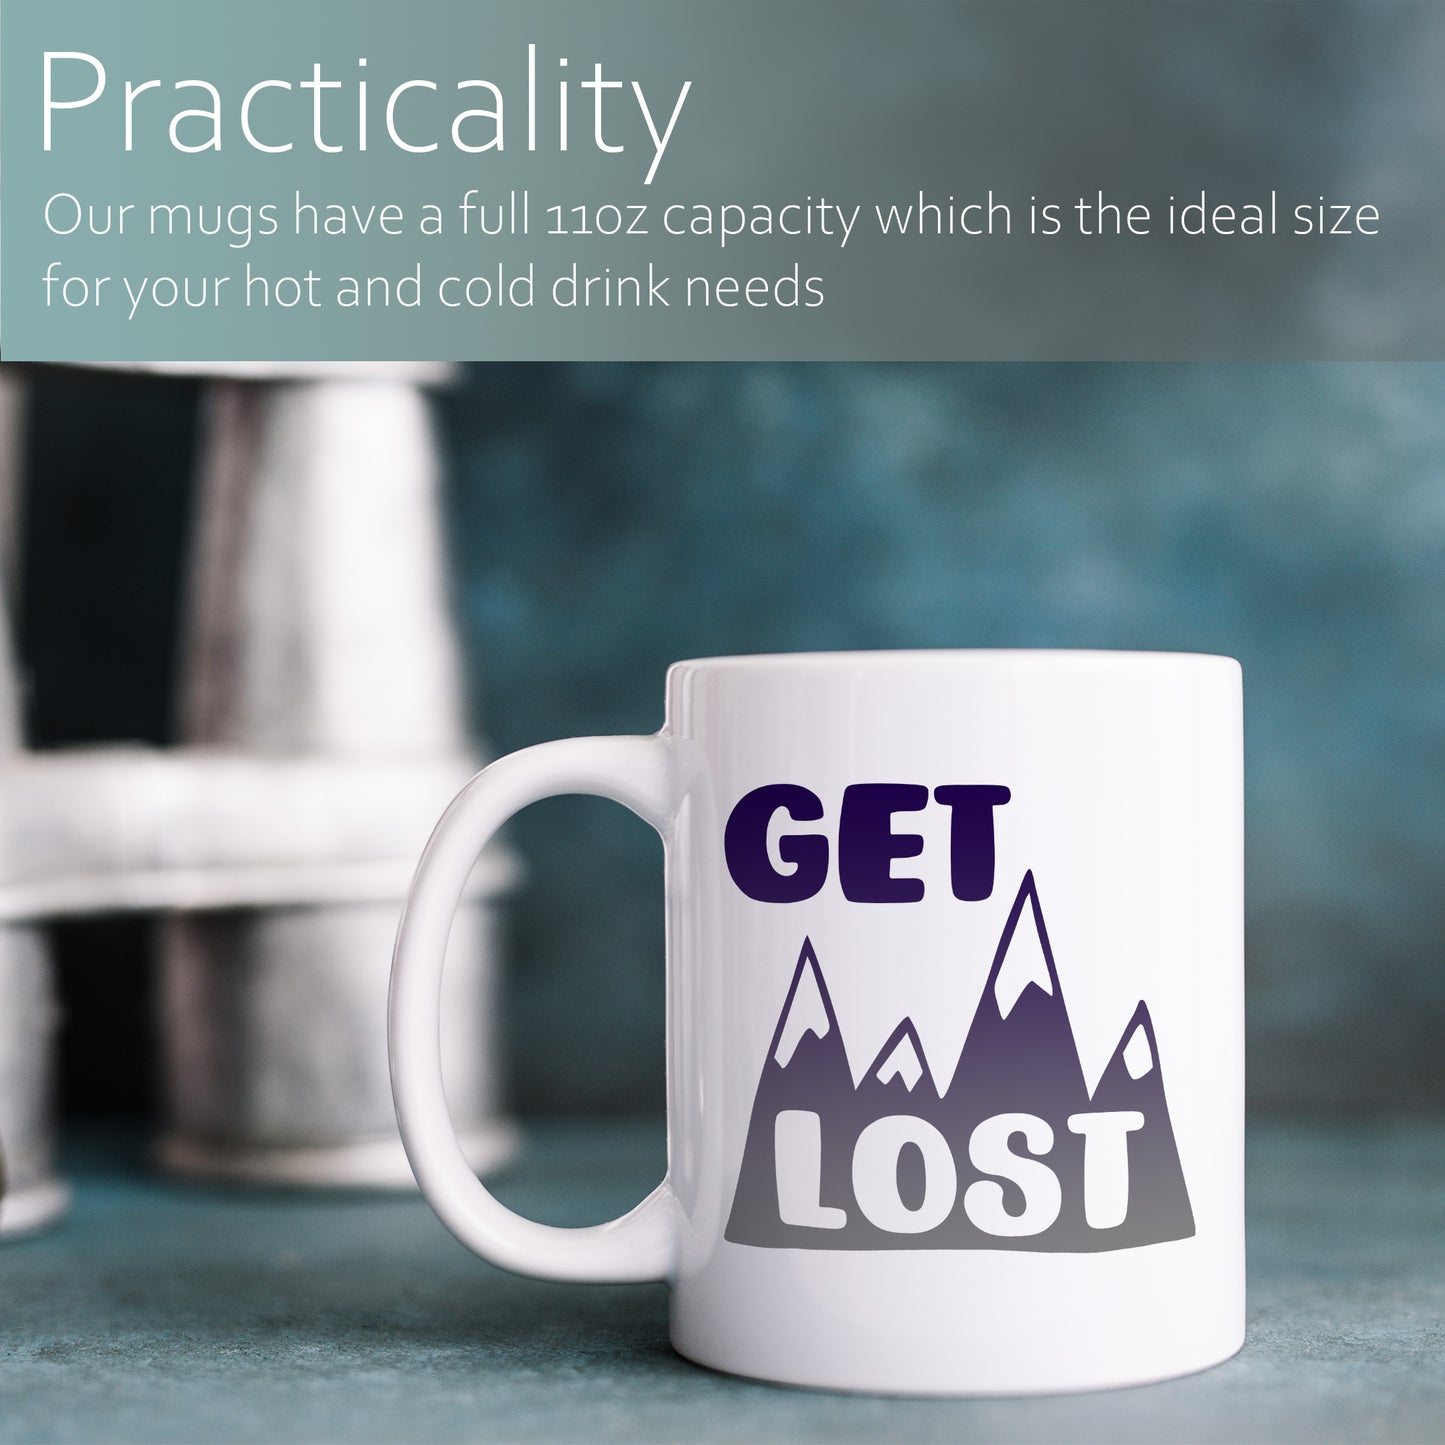 Get lost | Ceramic mug